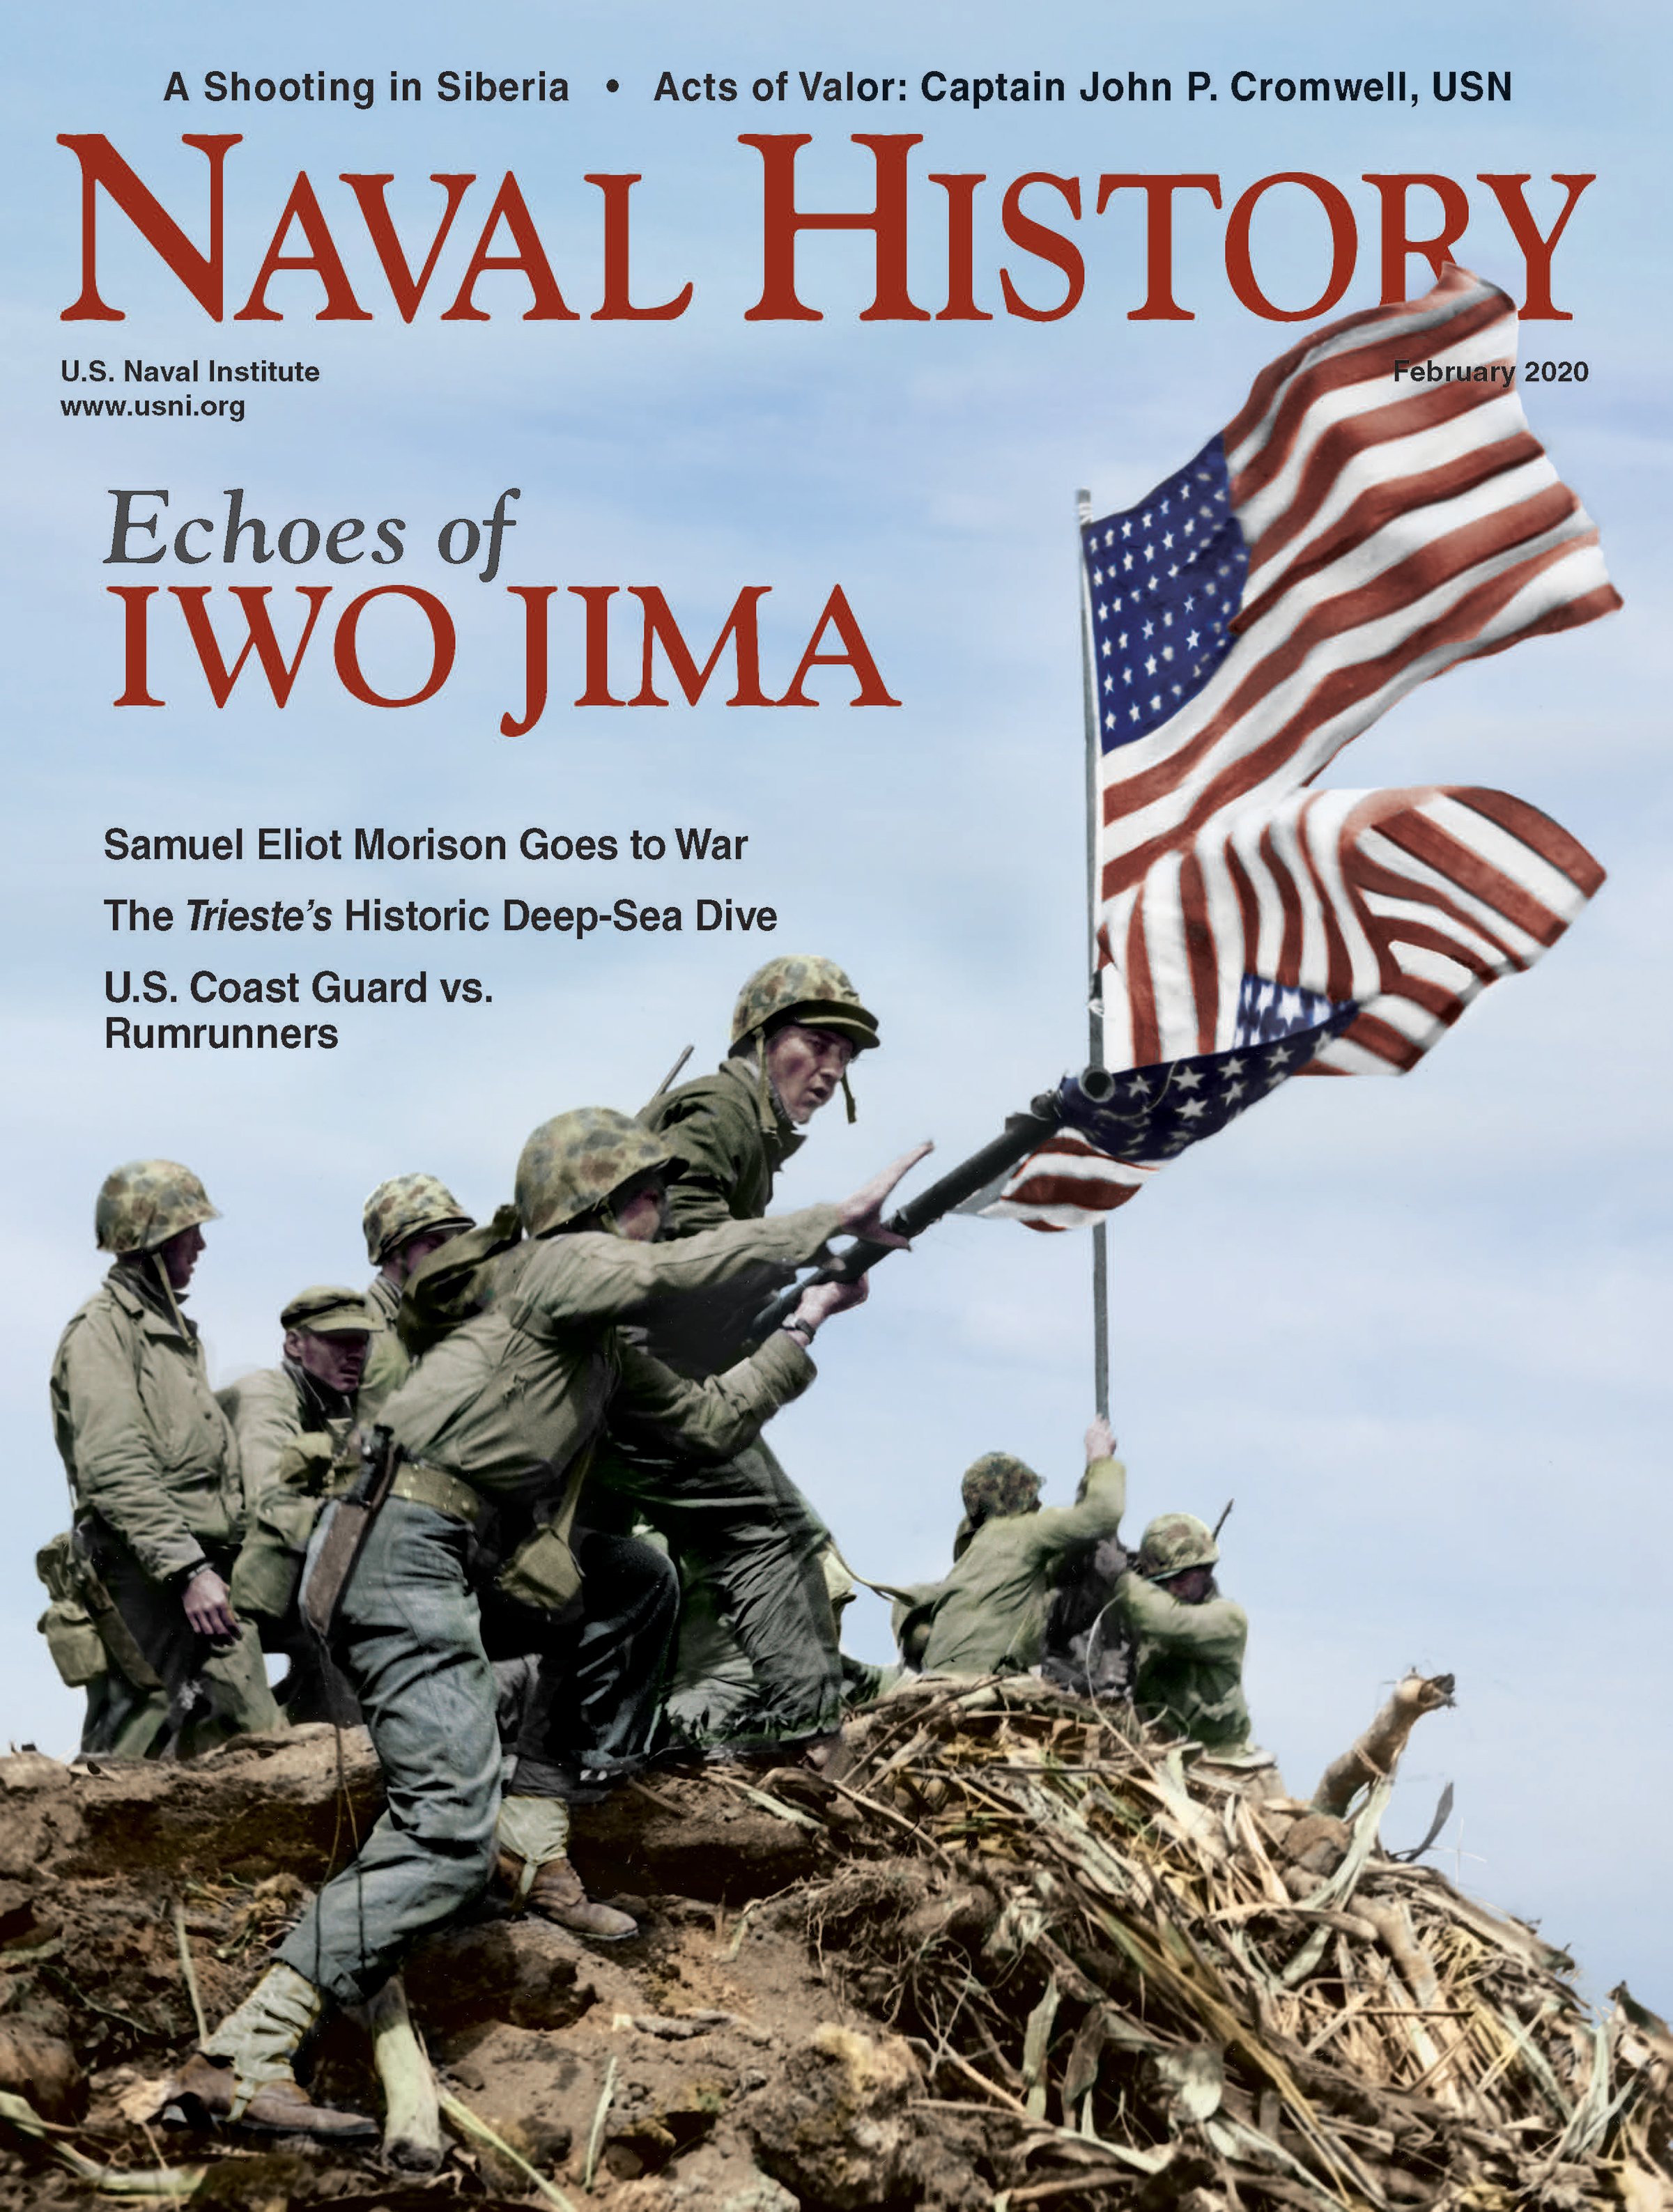 U.S. flags over Iwo Jima's Mount Suribachi grace the cover